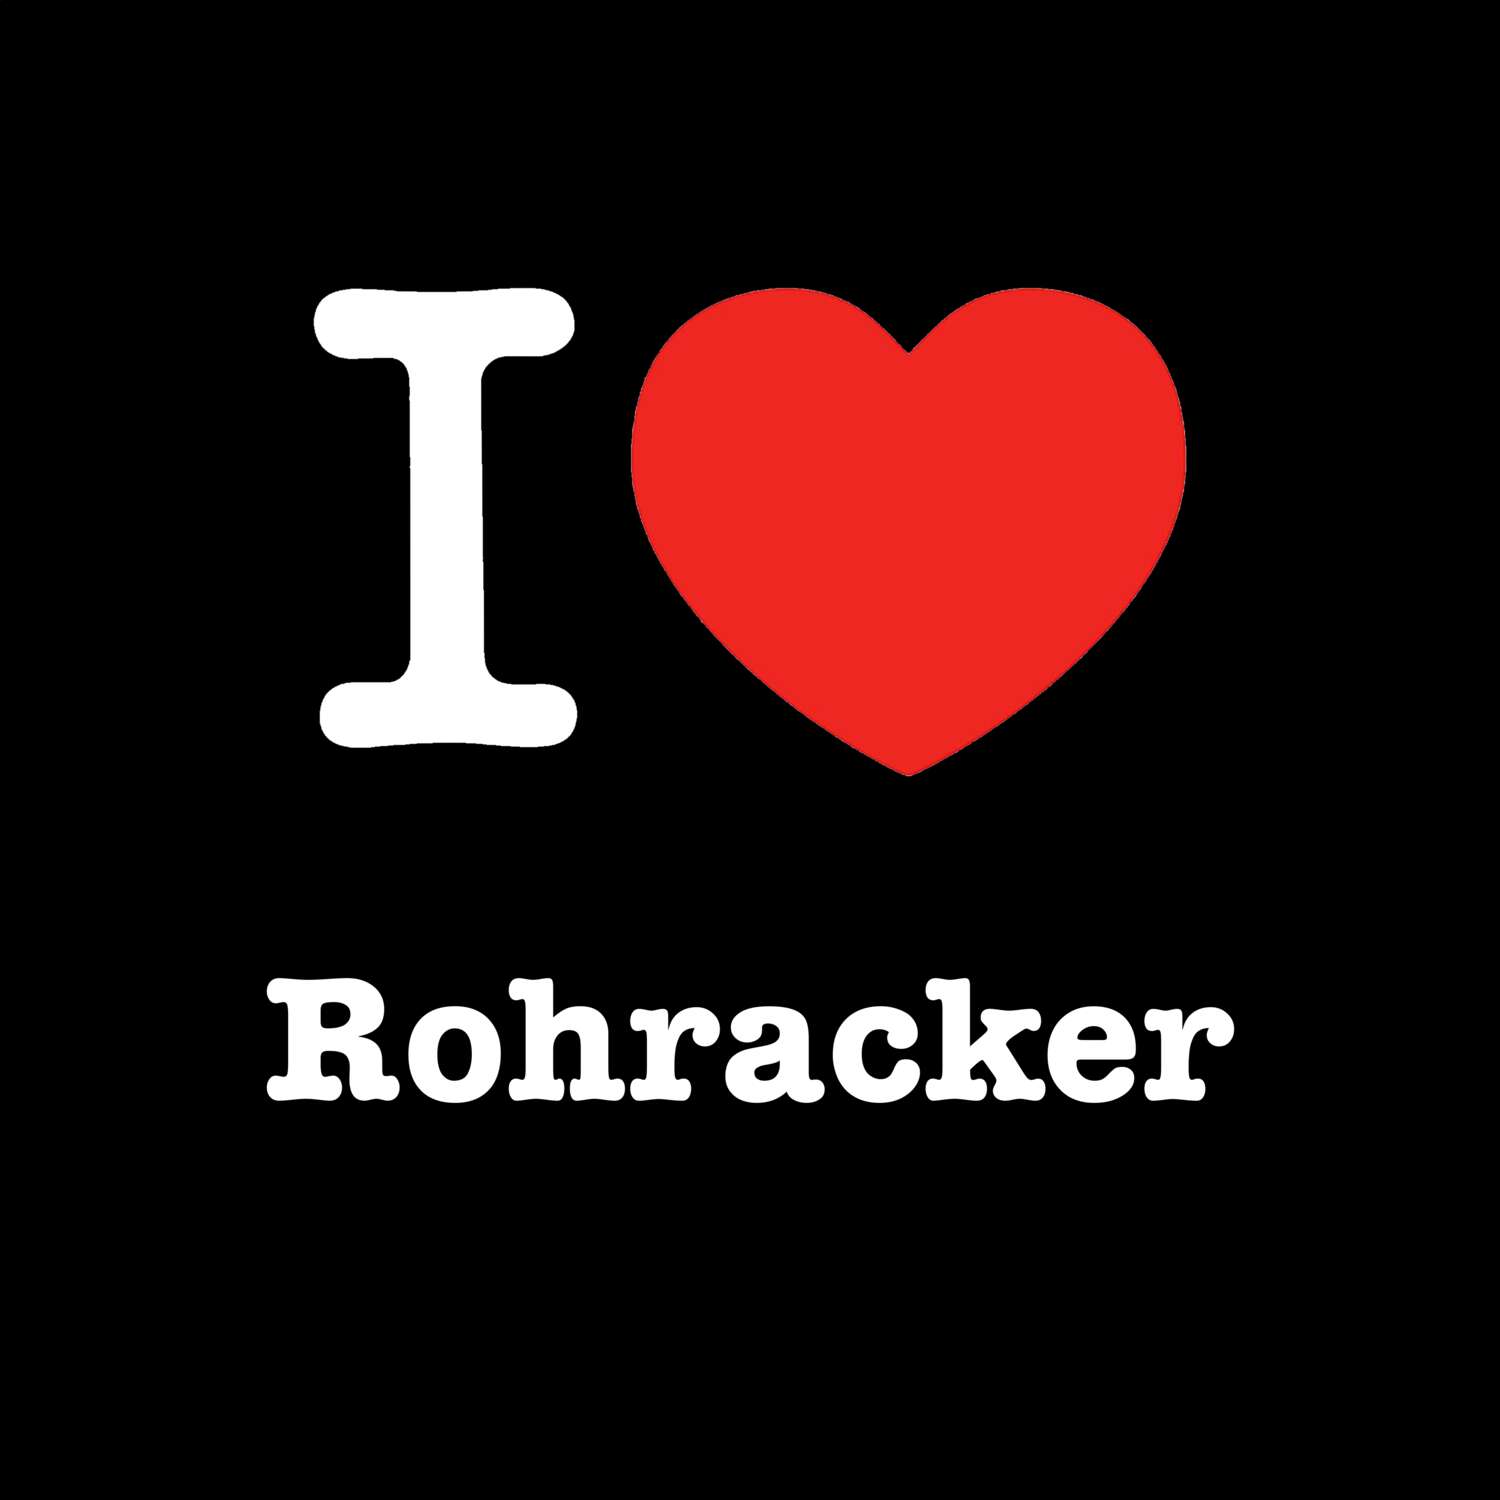 Rohracker T-Shirt »I love«